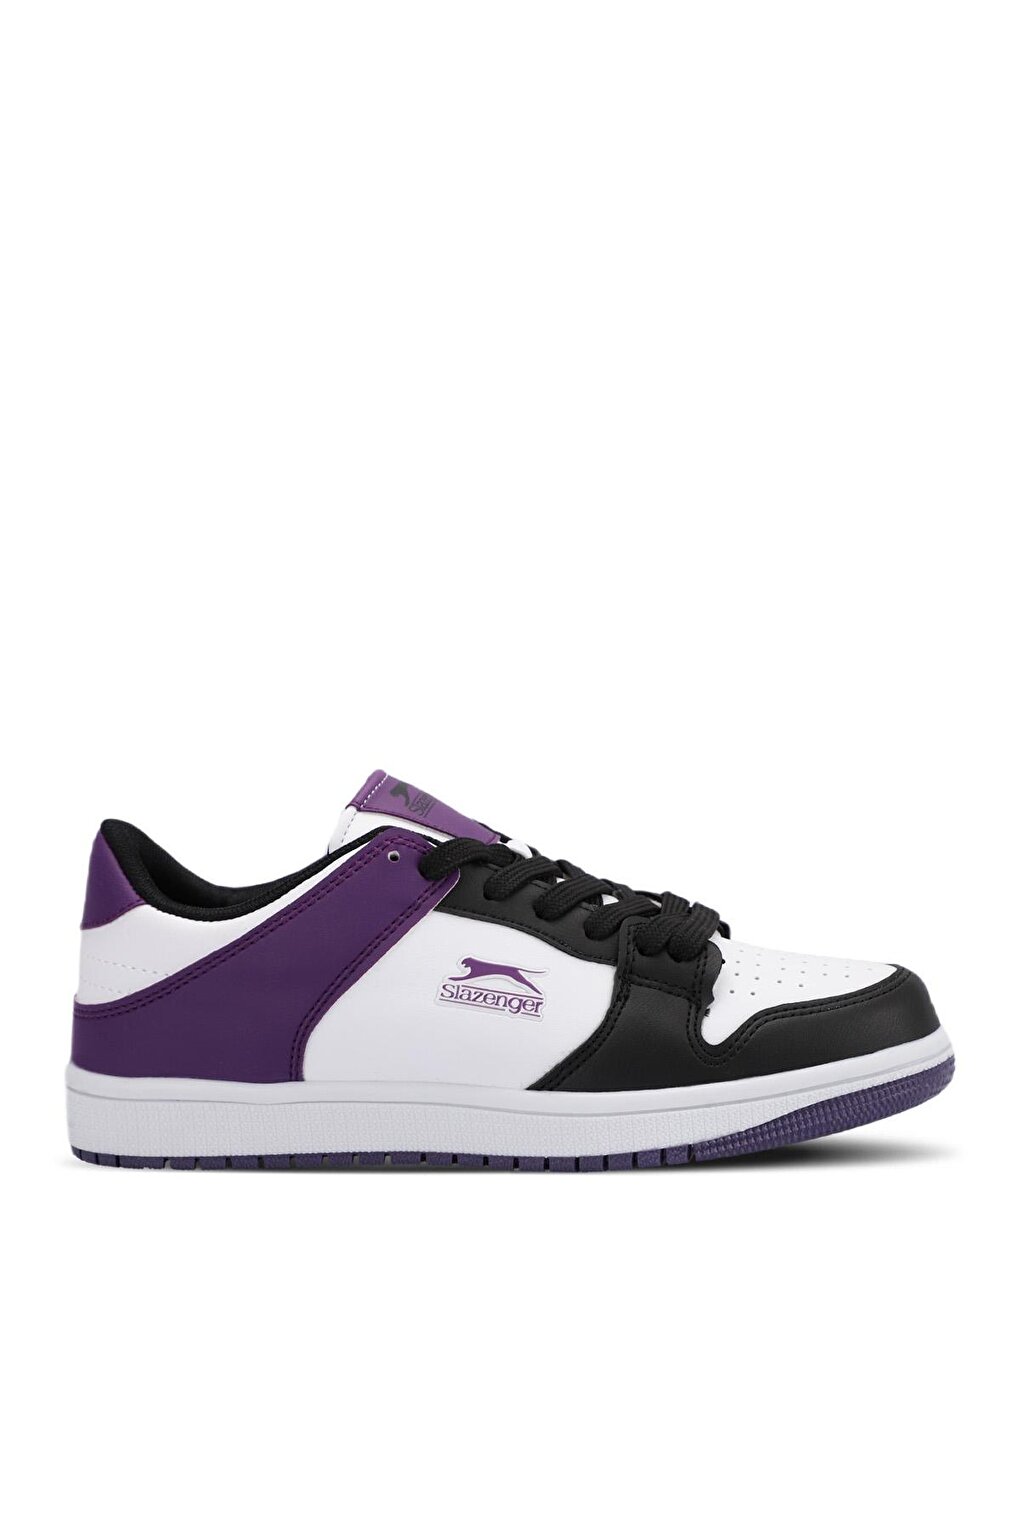 LABOR Sneaker Женская обувь Белый/Фиолетовый SLAZENGER daphne sneaker женская обувь белый розовый slazenger